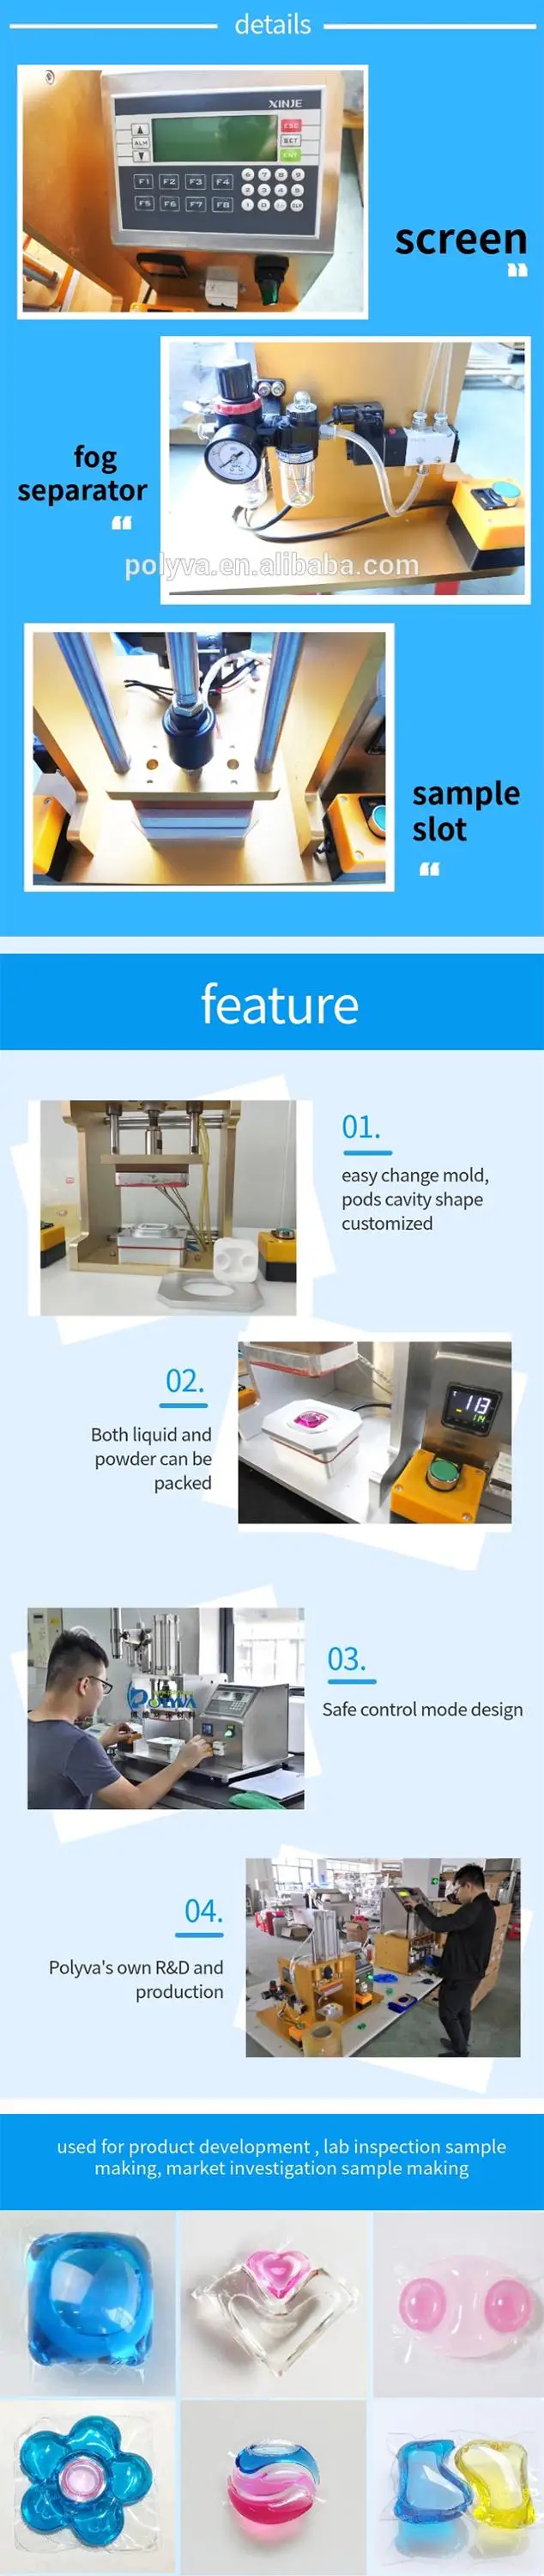 Polyva attractive price laundry pods sample making machine